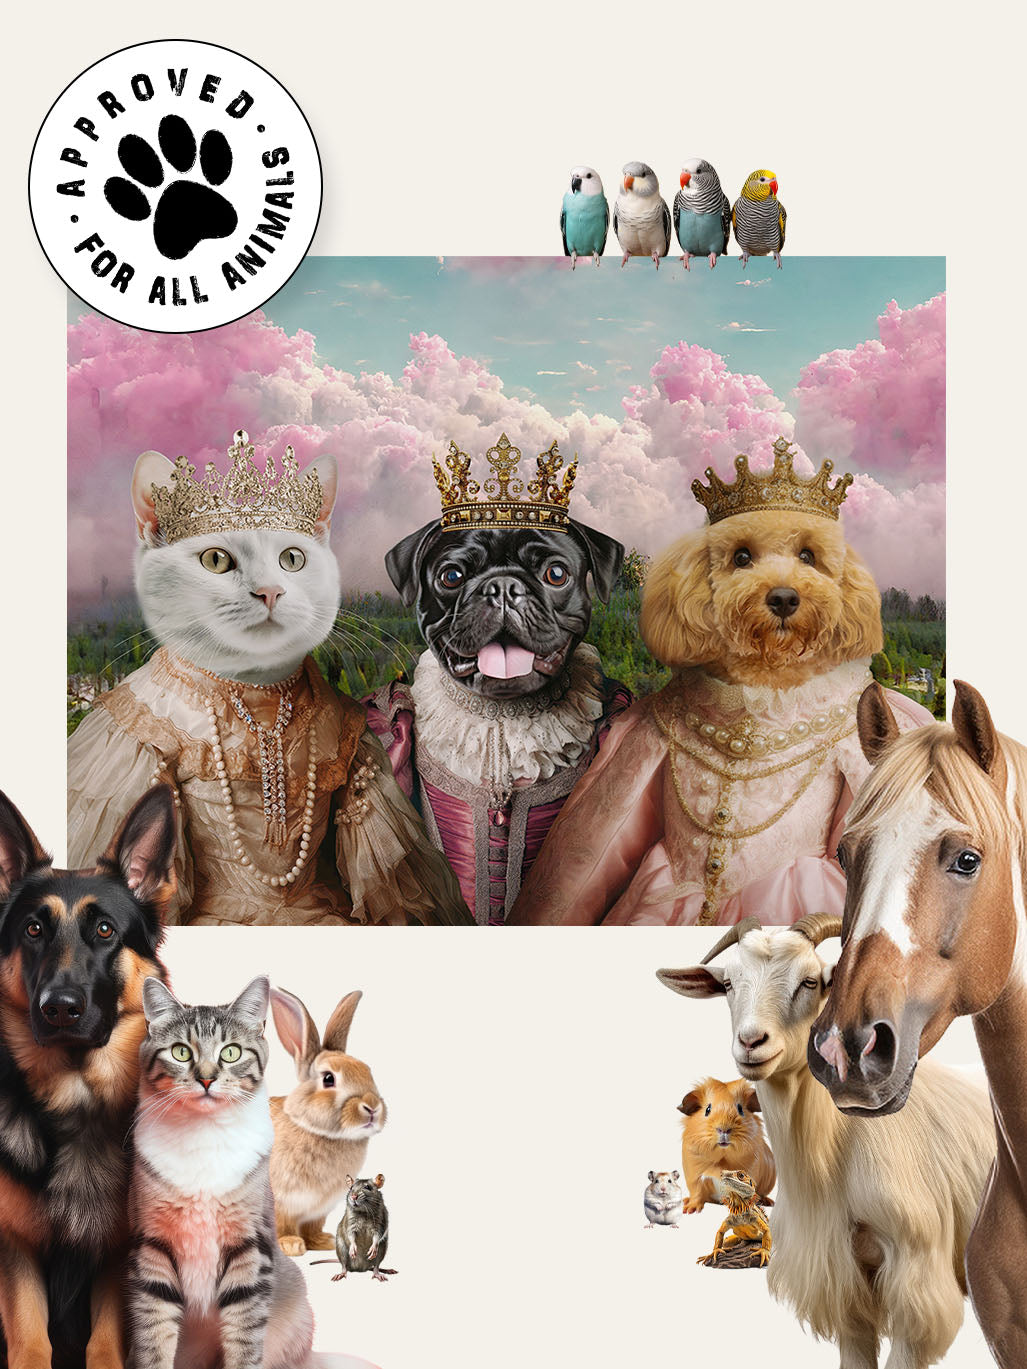 The Regal Sisters - Custom Pet Canvas